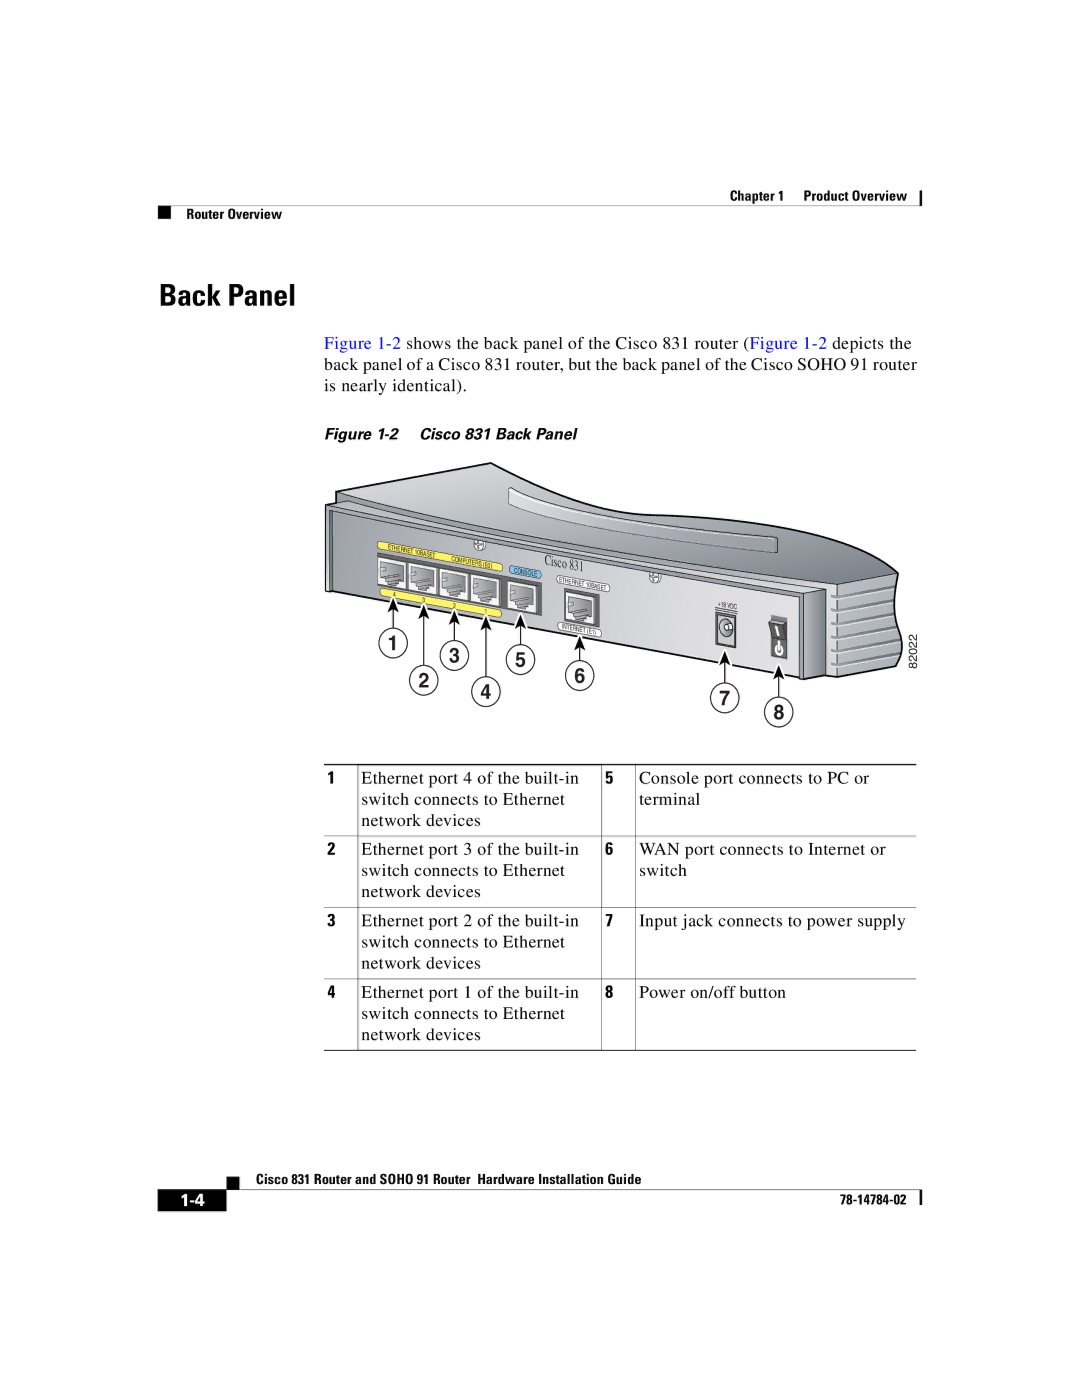 Cisco Systems manual Cisco 831 Back Panel 